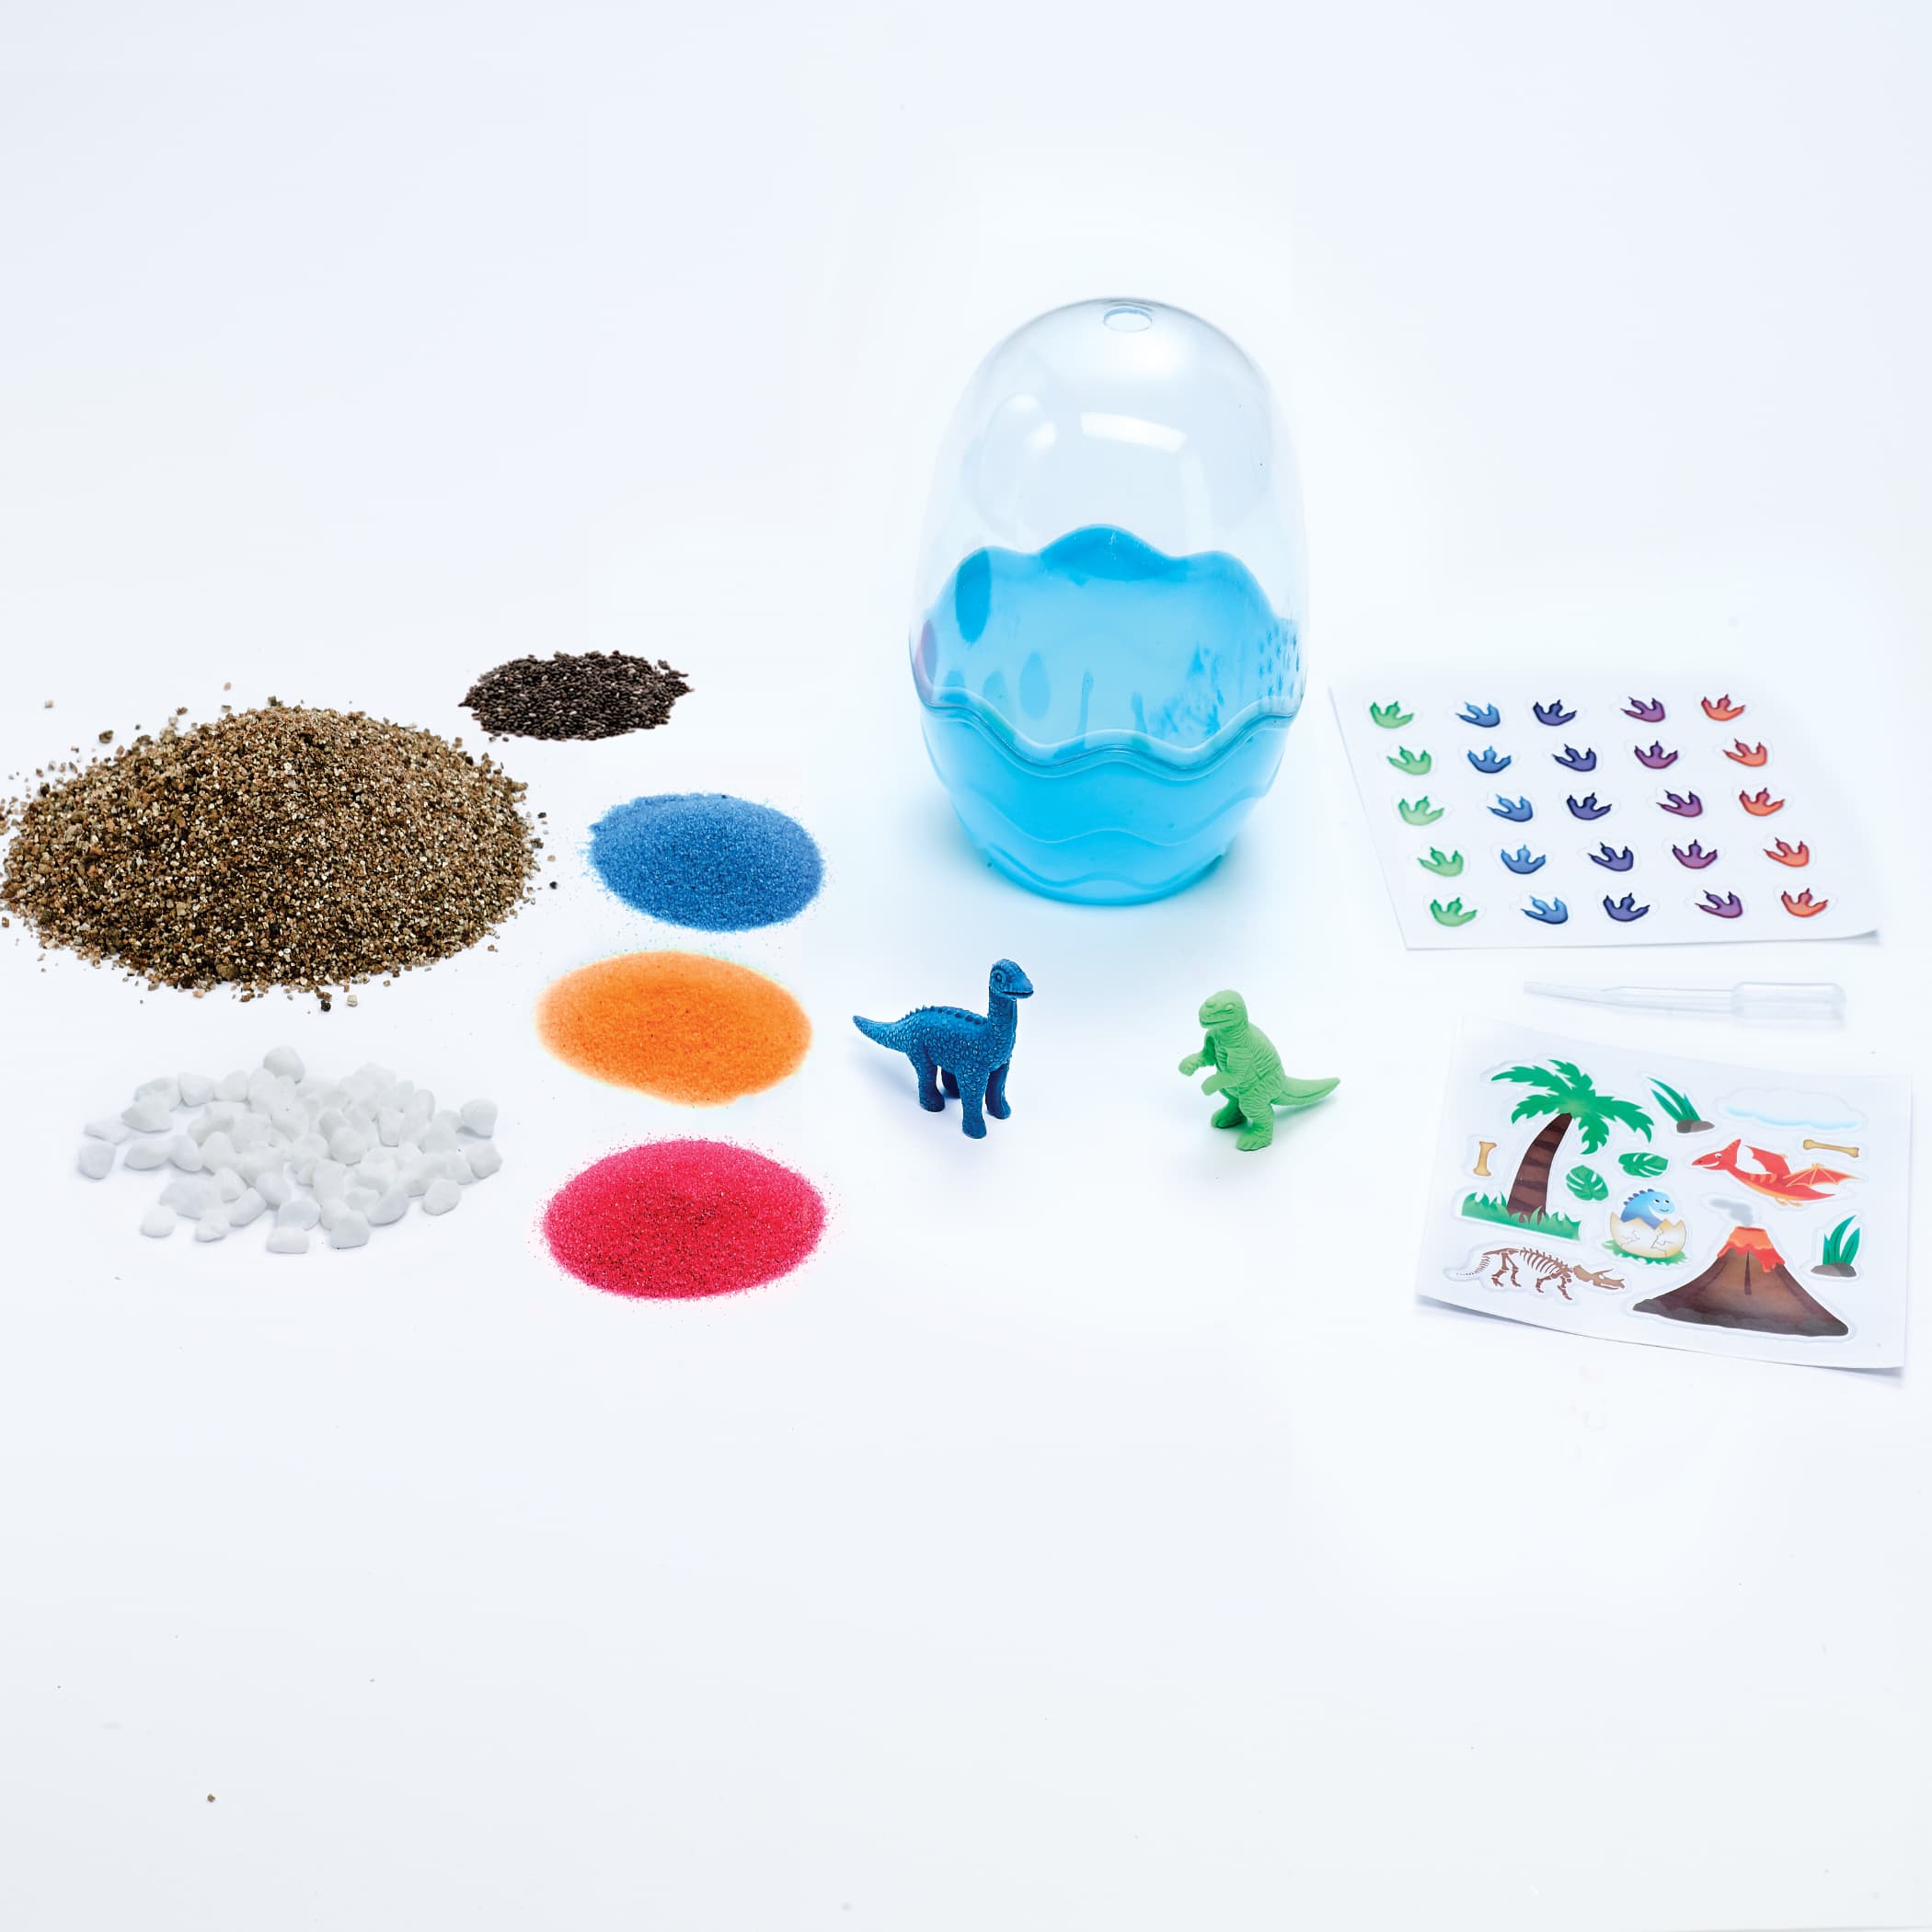 Faber-Castell&#xAE; Creativity for Kids&#xAE; Mini Garden Dinosaur